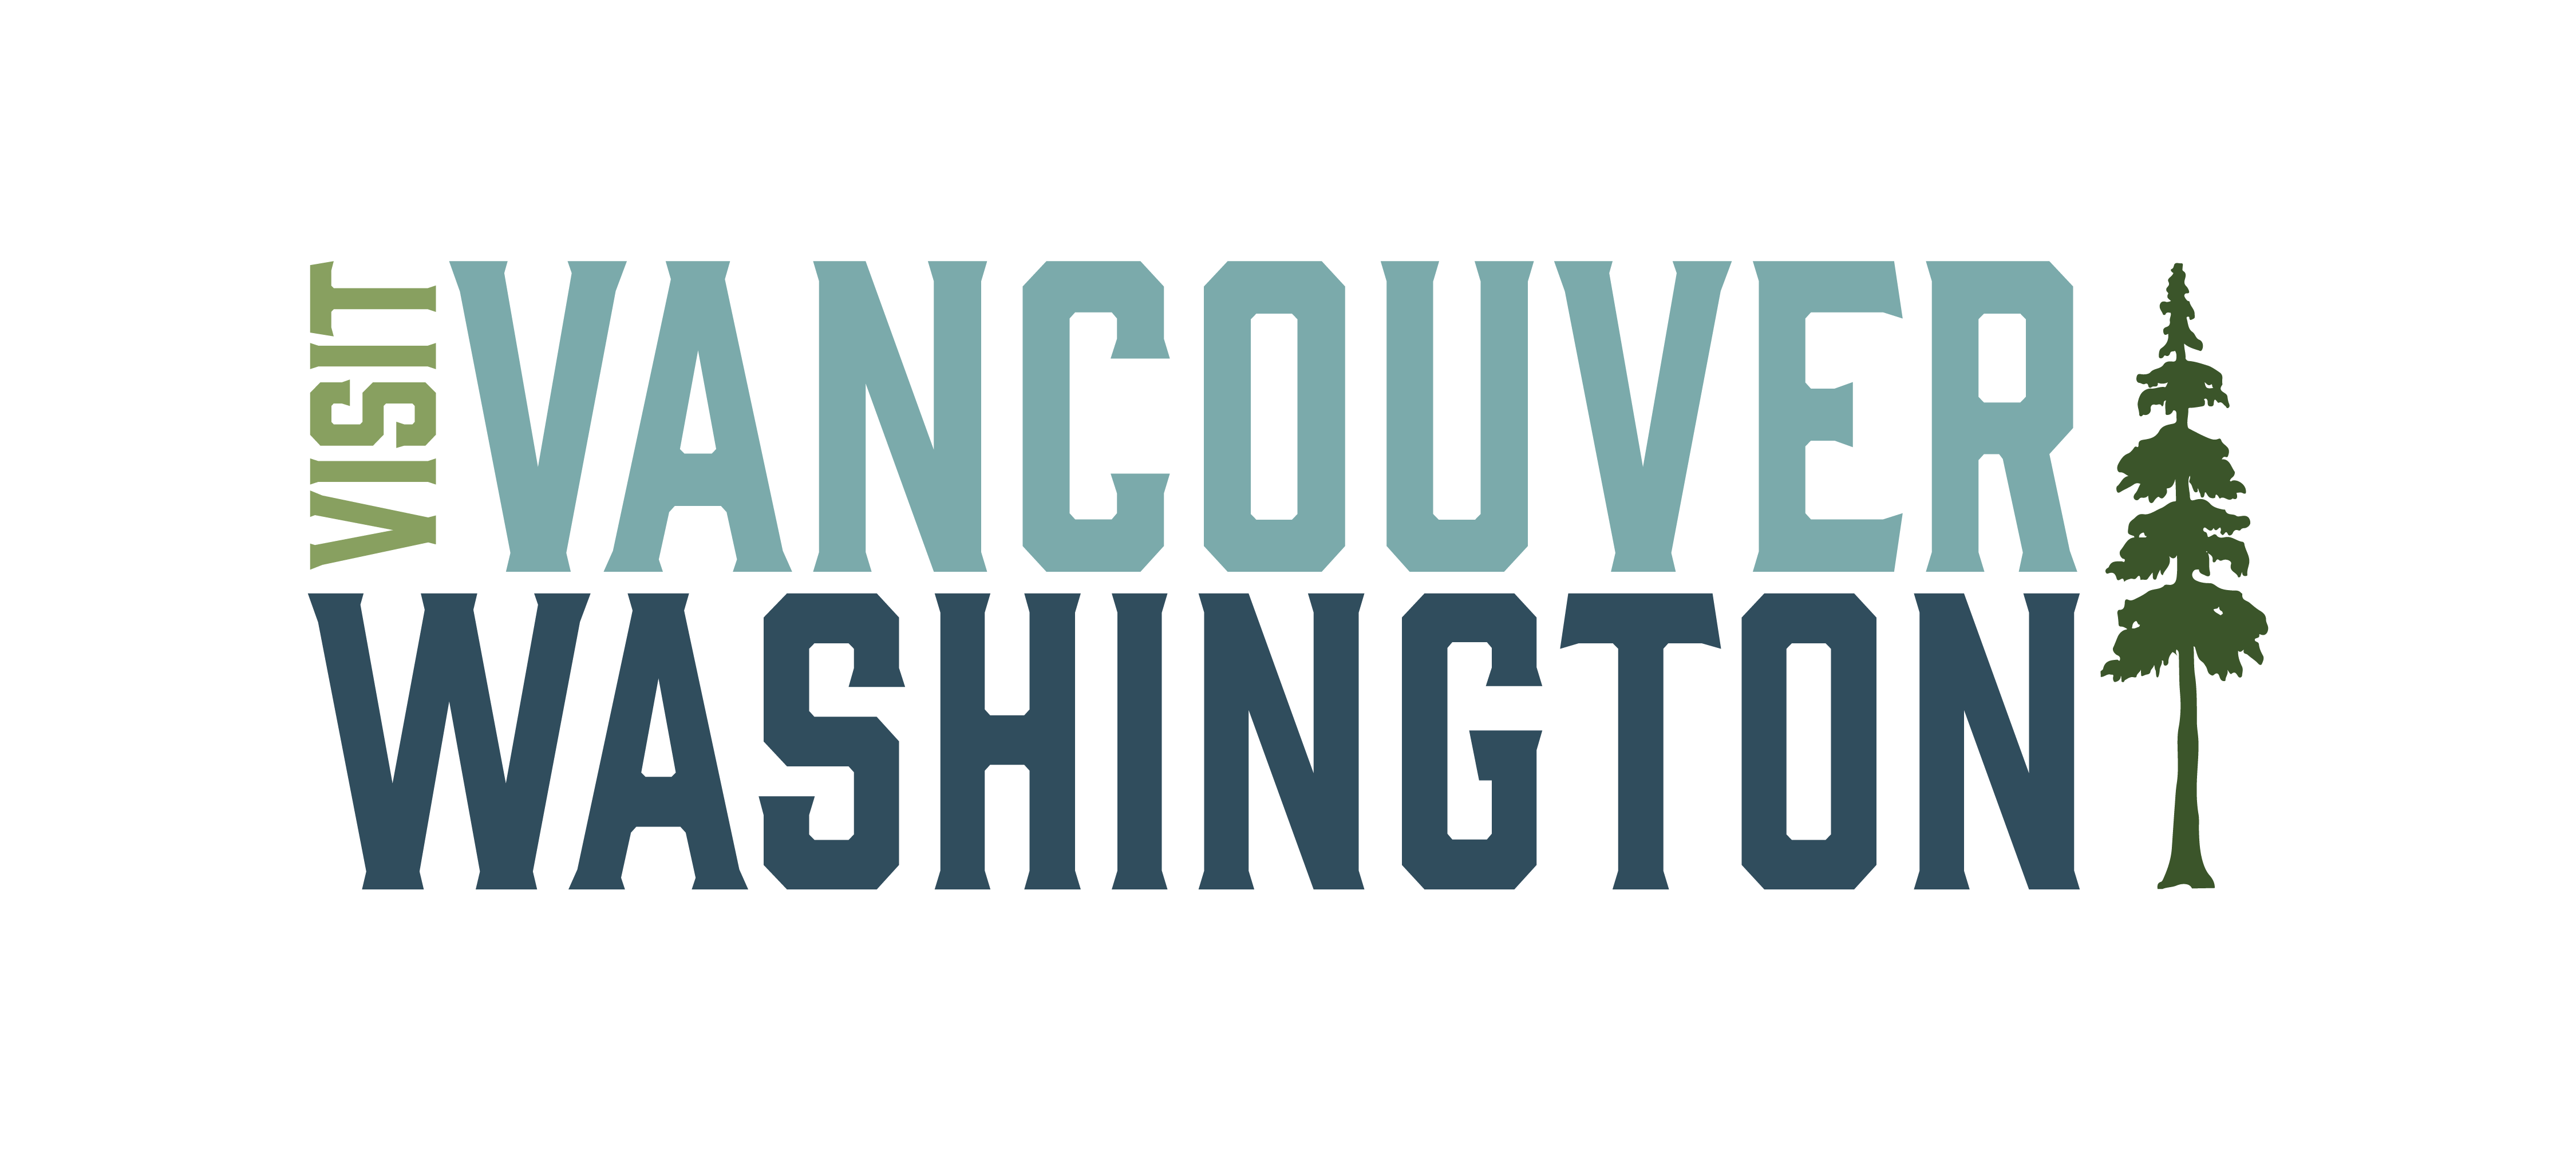 Visit Vancouver Washington Logo